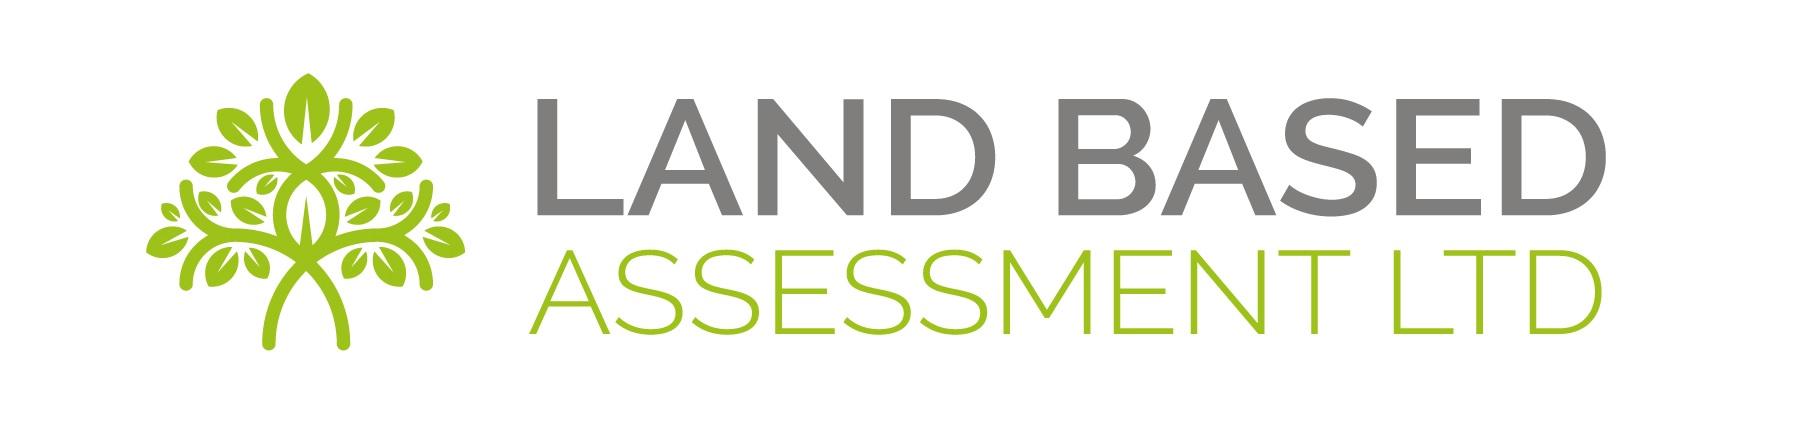 Land Based Assessment Limited